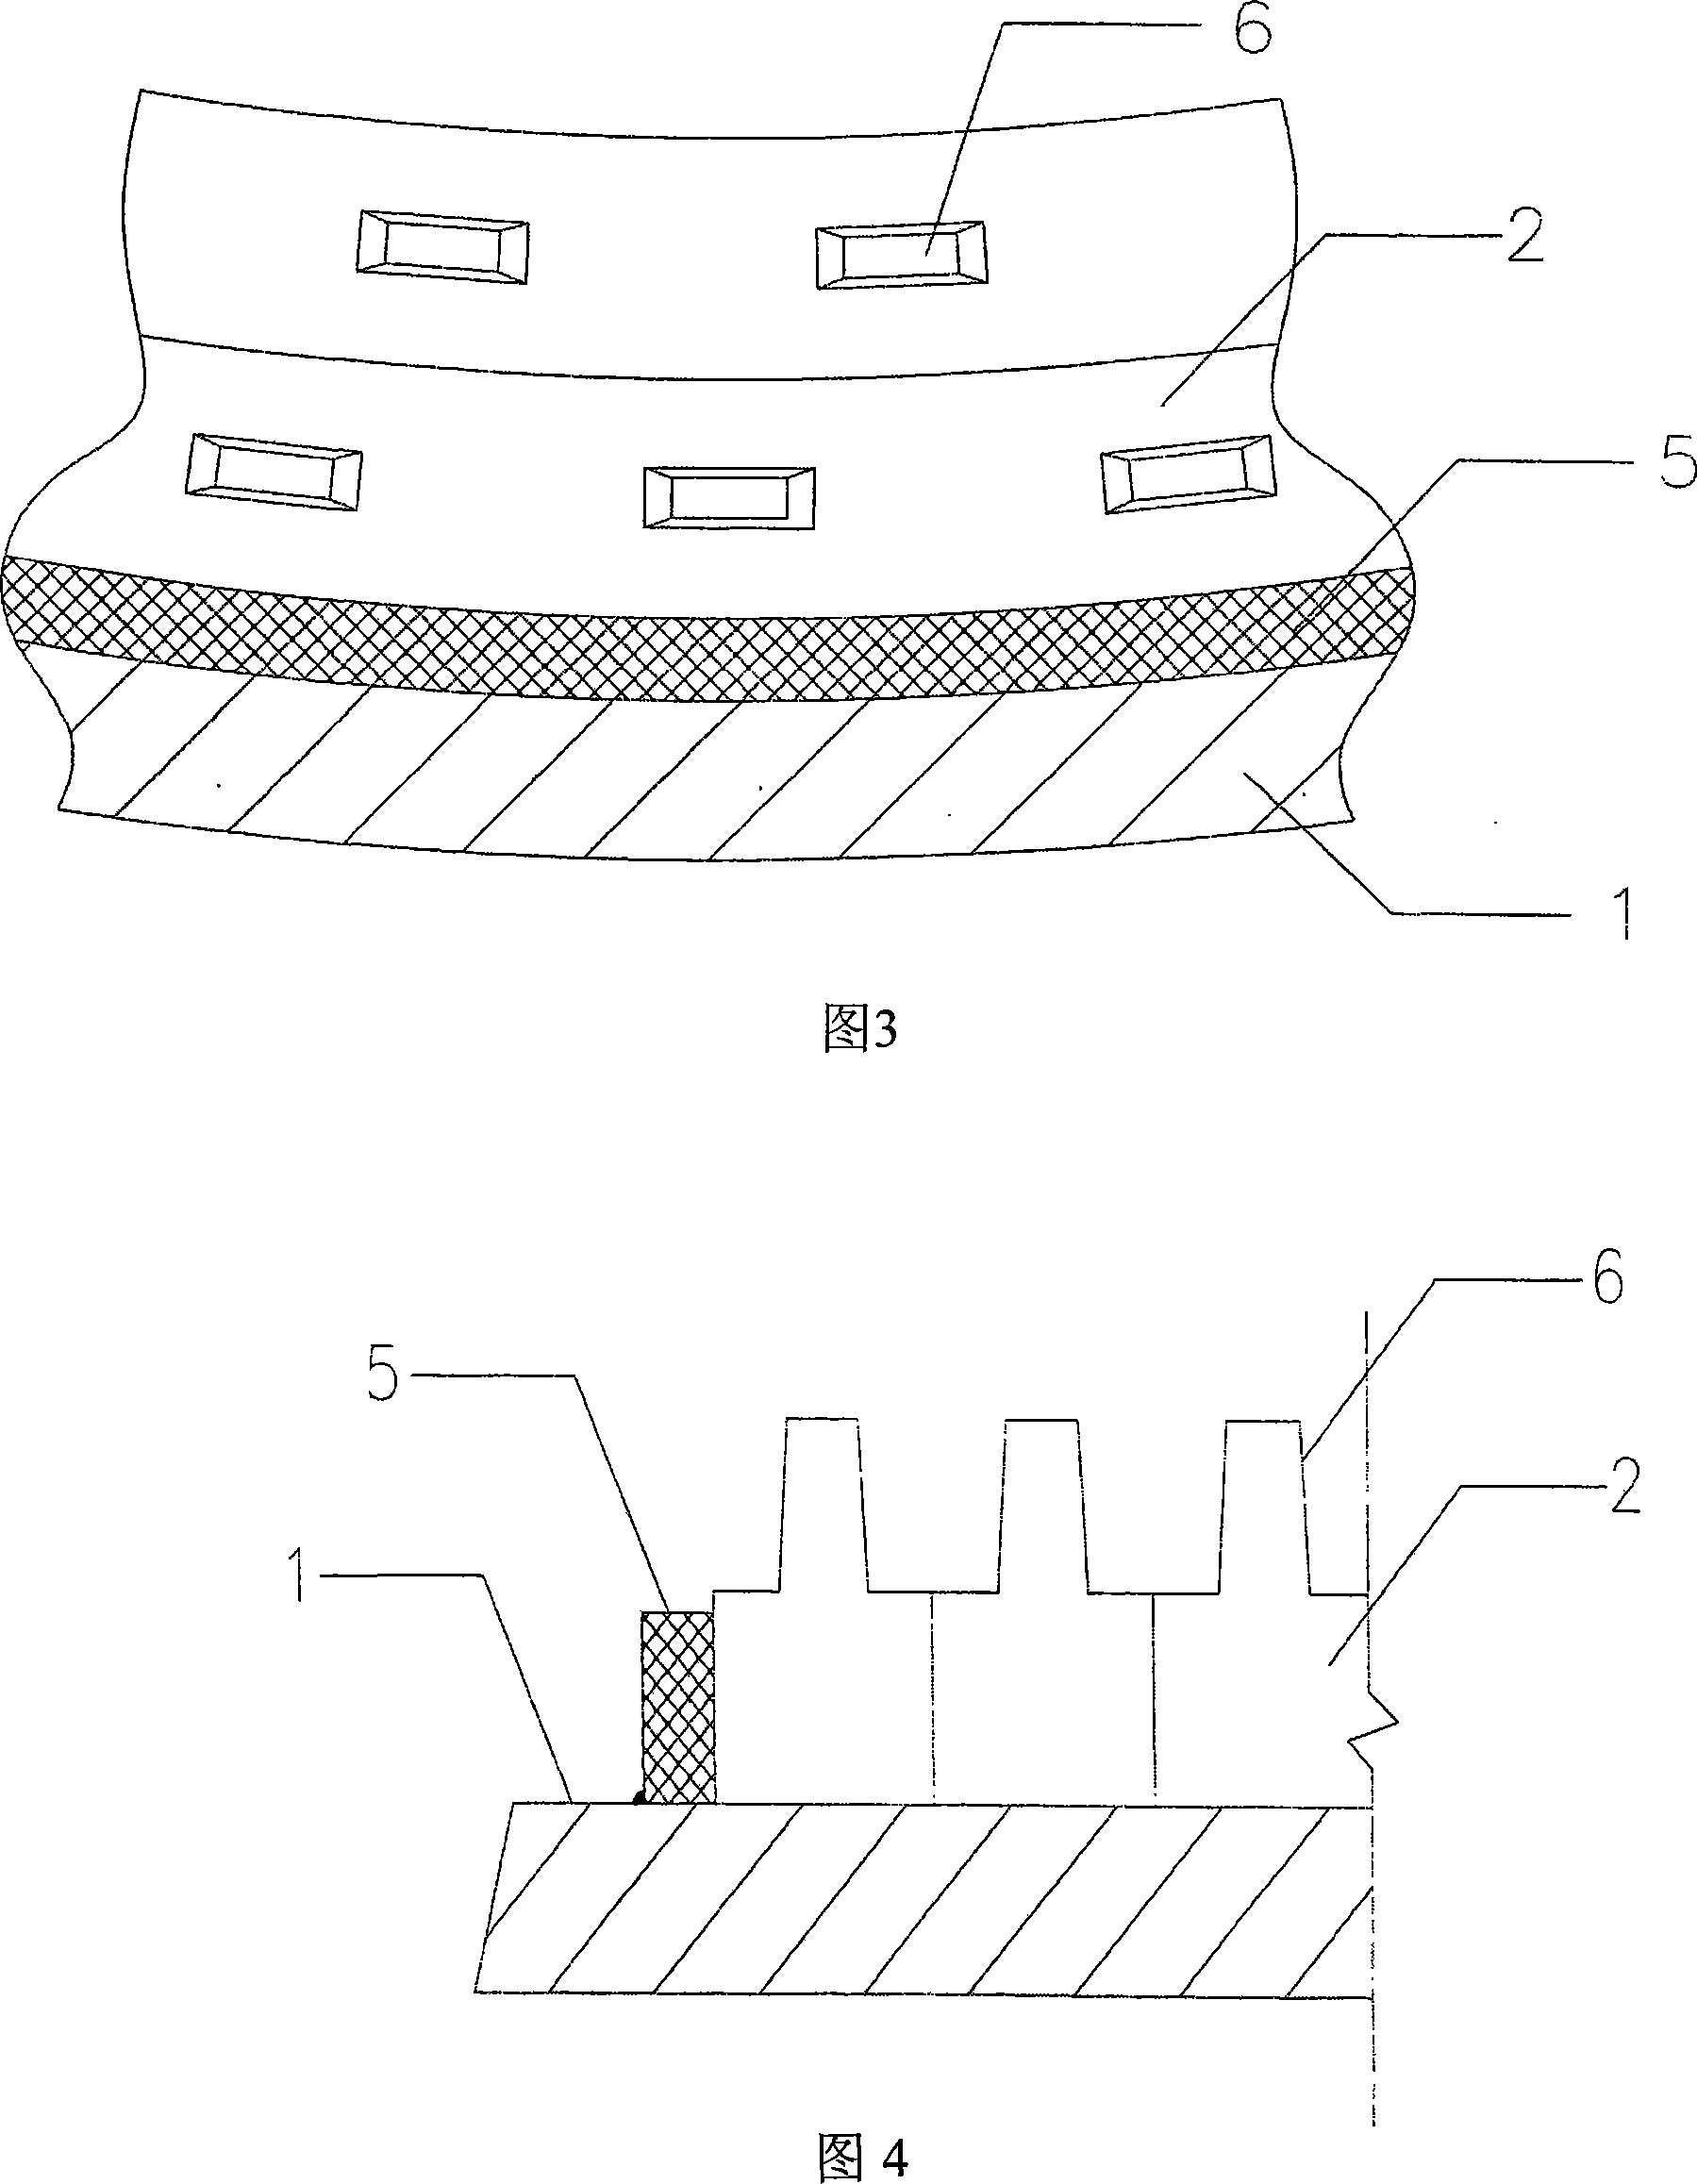 Plate-type aerator diaphragm perforation device